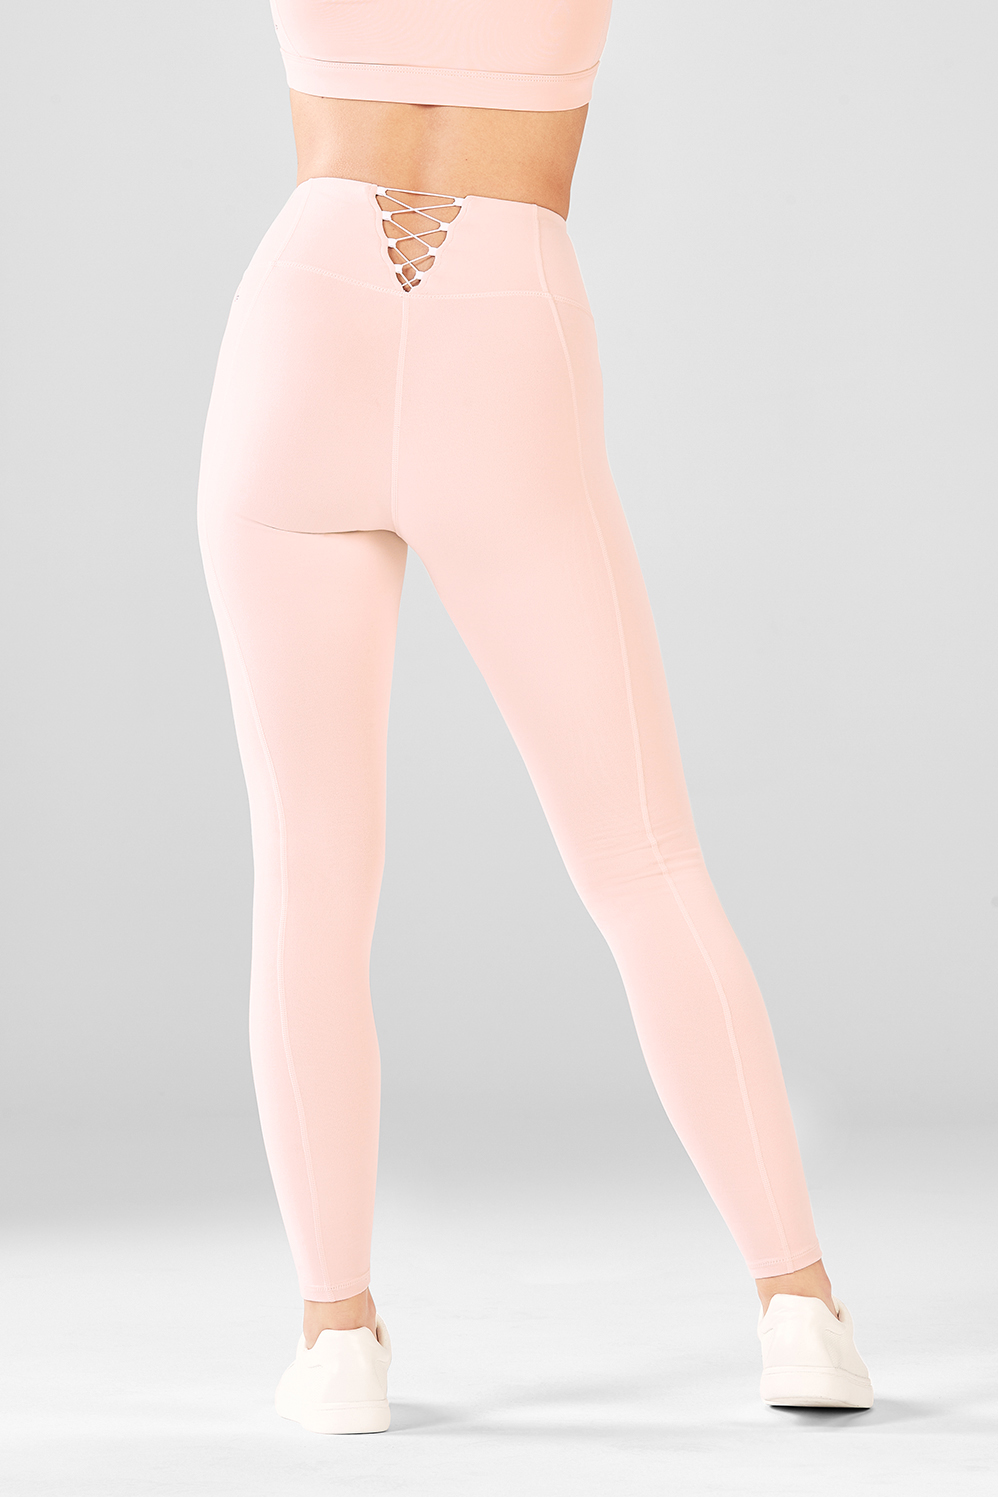 Fabletics, Pants & Jumpsuits, Fabletics Powerhold Cropped Leggings Blush  Pink Size Xl